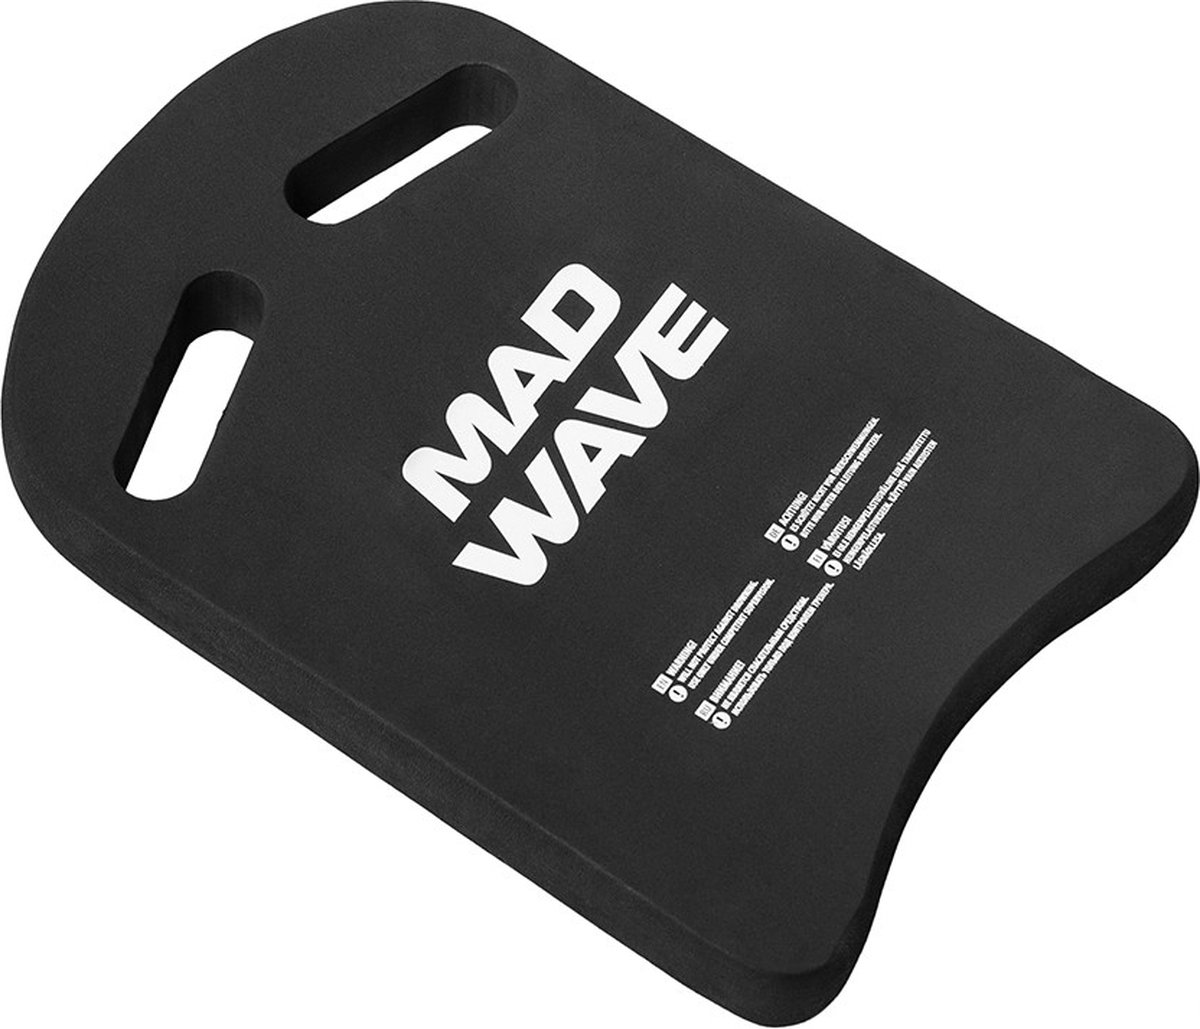 Cross Kickboards - Unisex | Mad Wave Accessoires - Mad Wave Accessoires